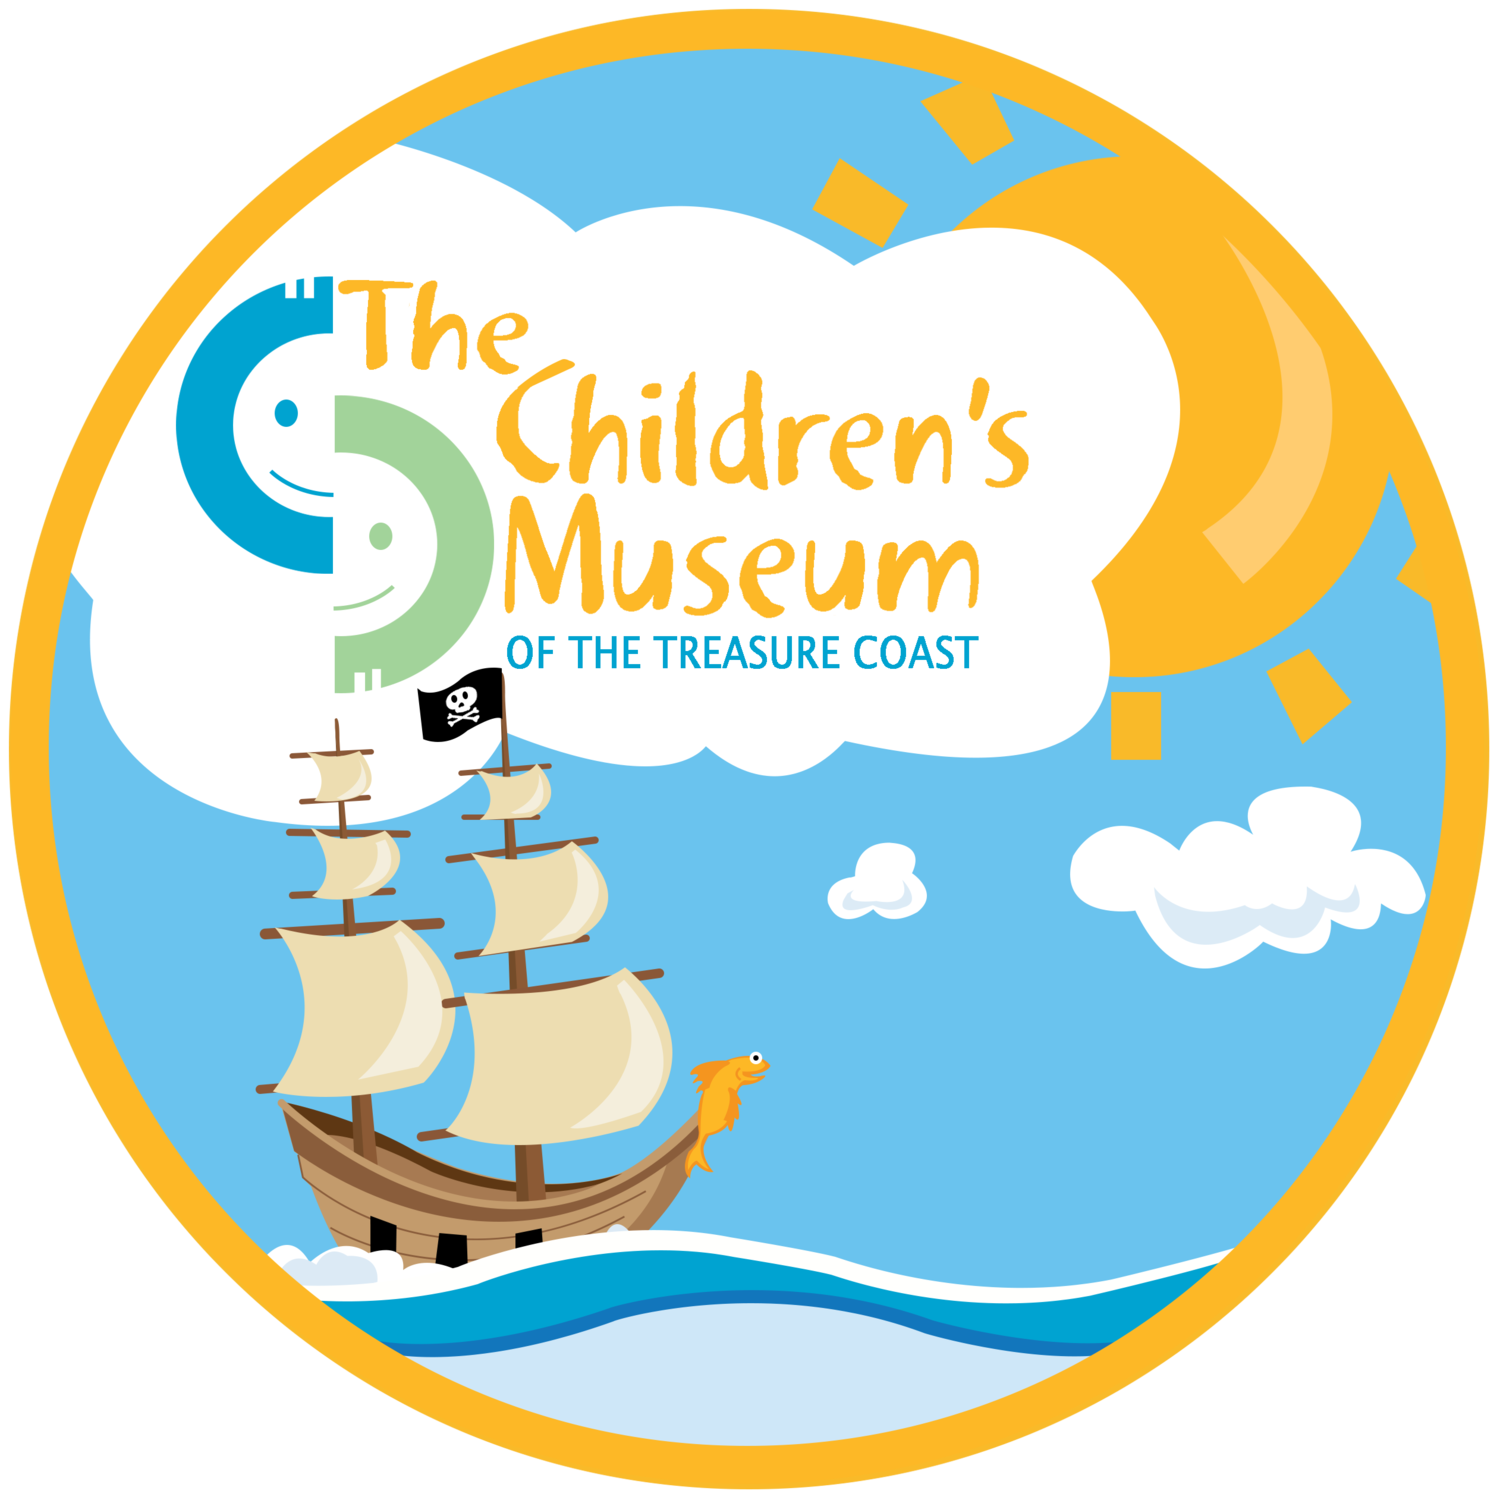 The Children's Museum of the Treasure Coast